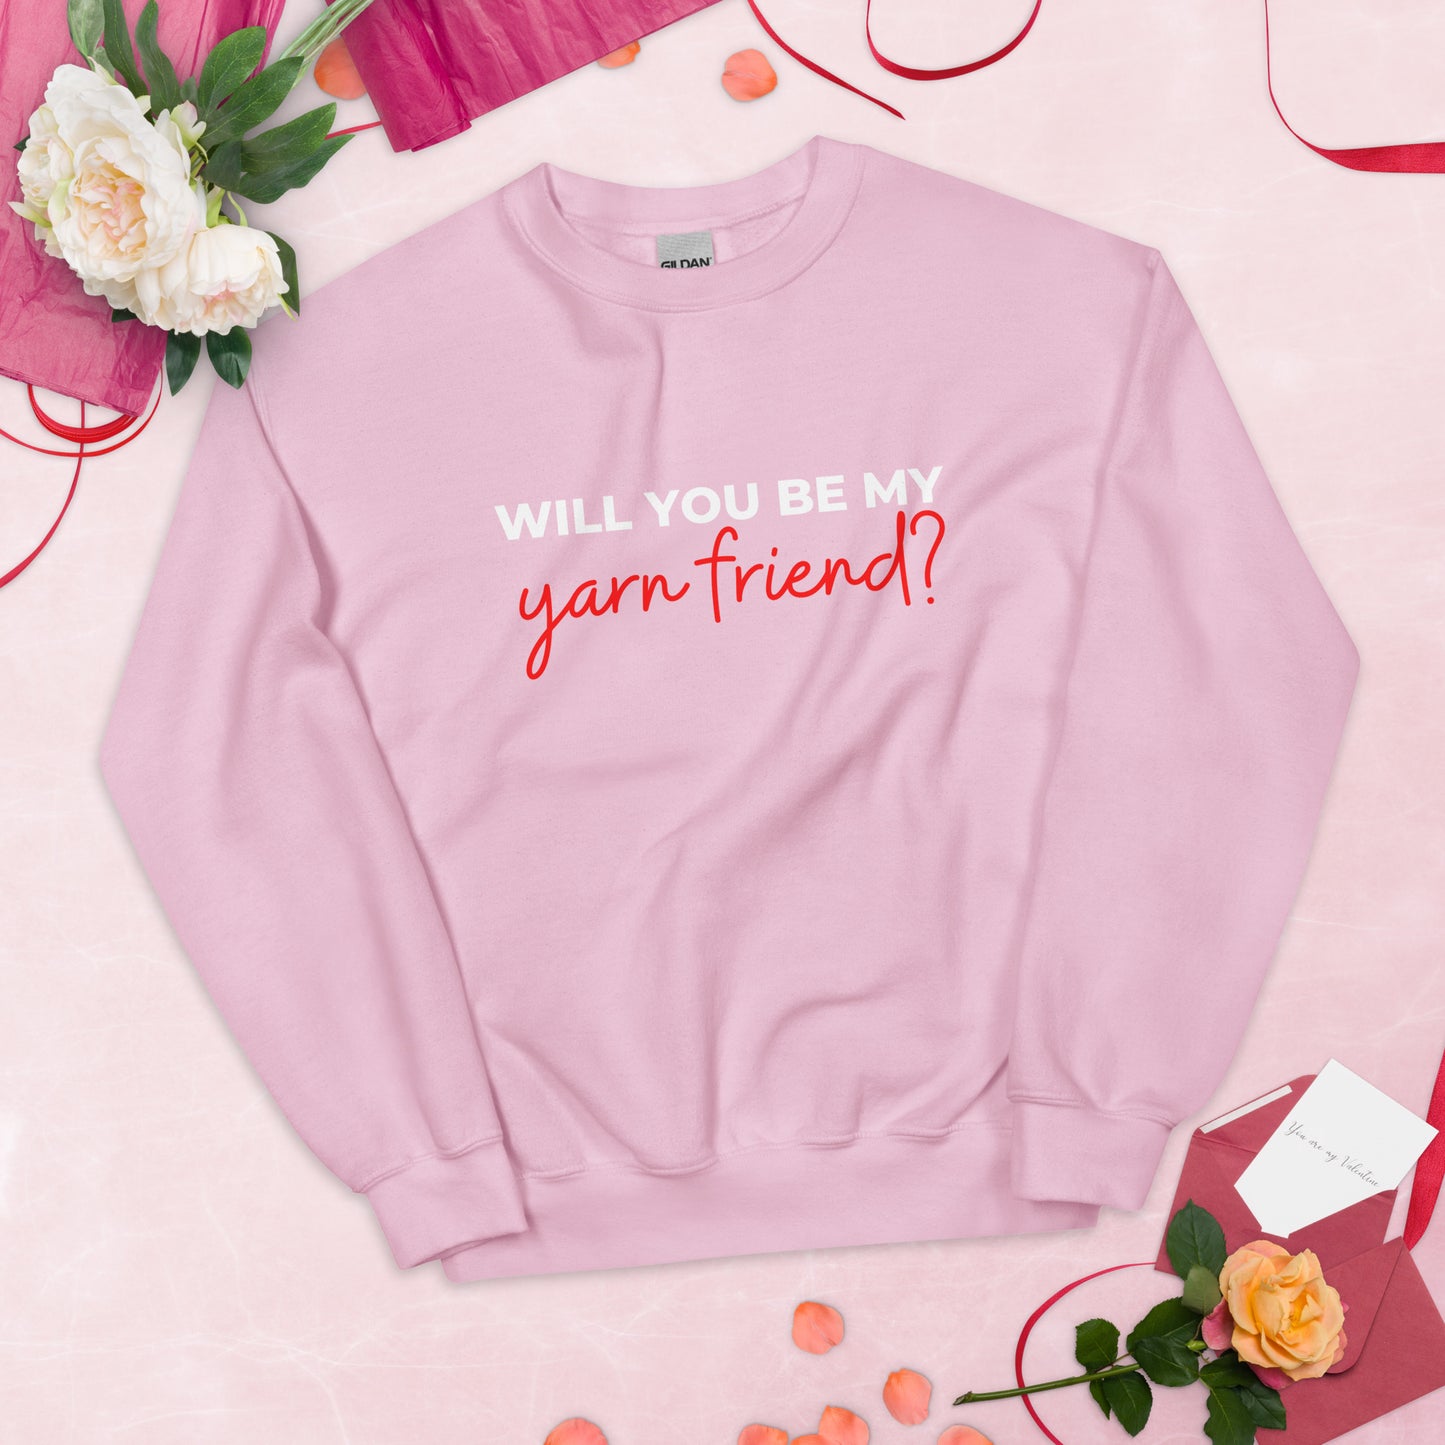 BE MY YARN FRIEND | Crewneck Sweater in Light Pink